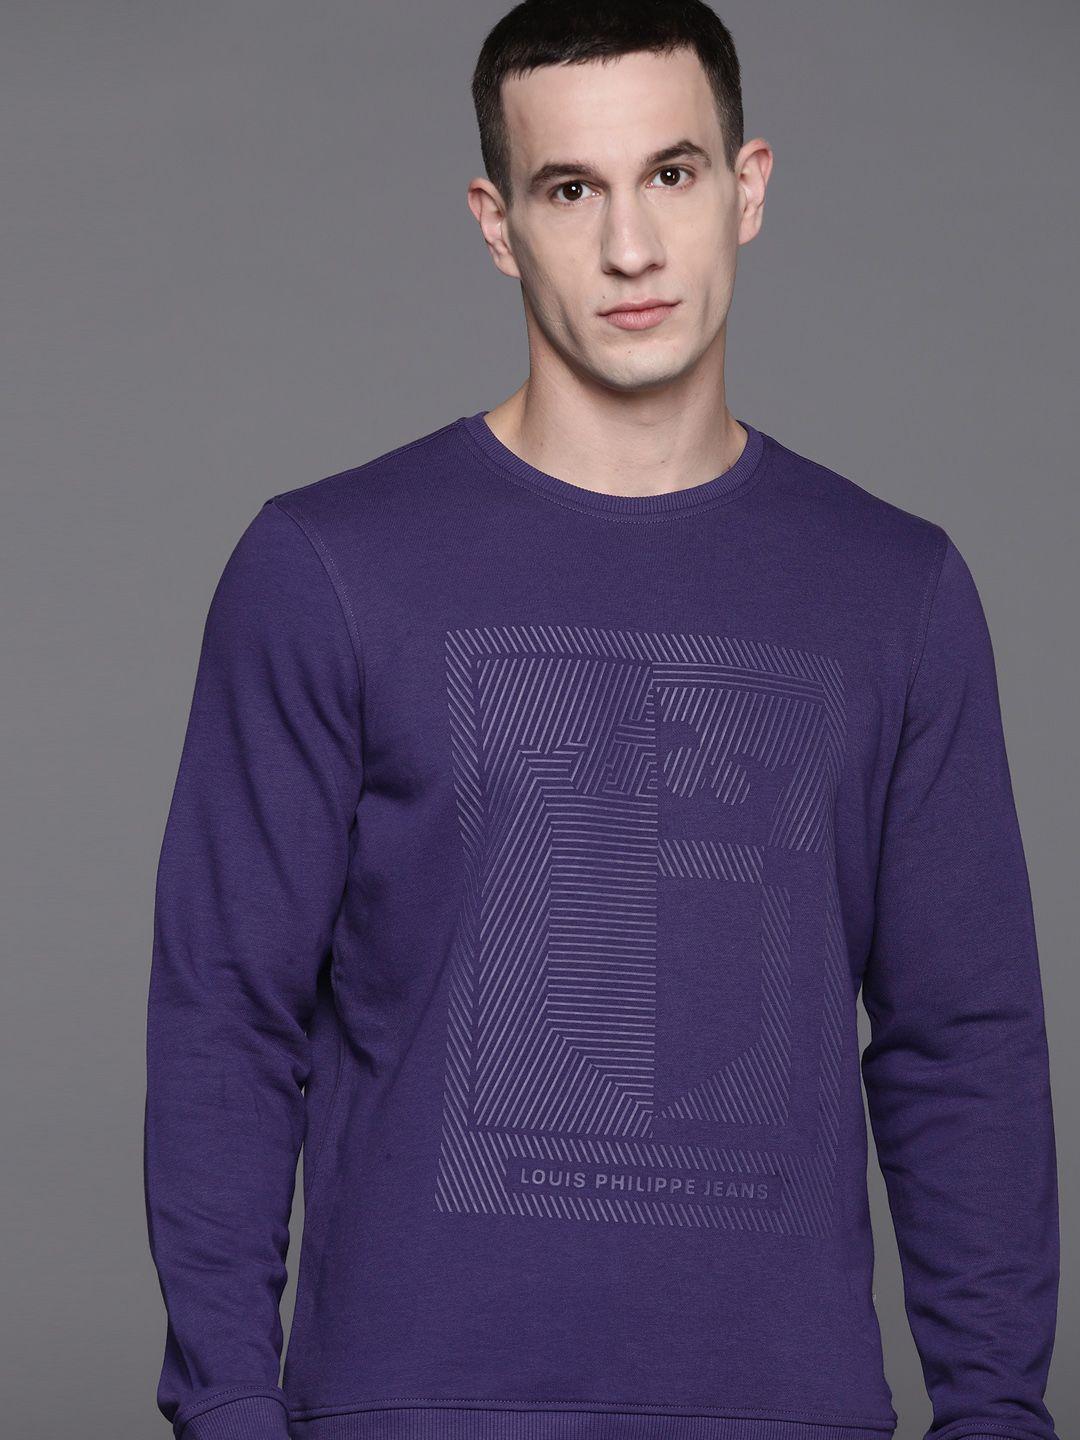 louis philippe jeans brand logo print sweatshirt